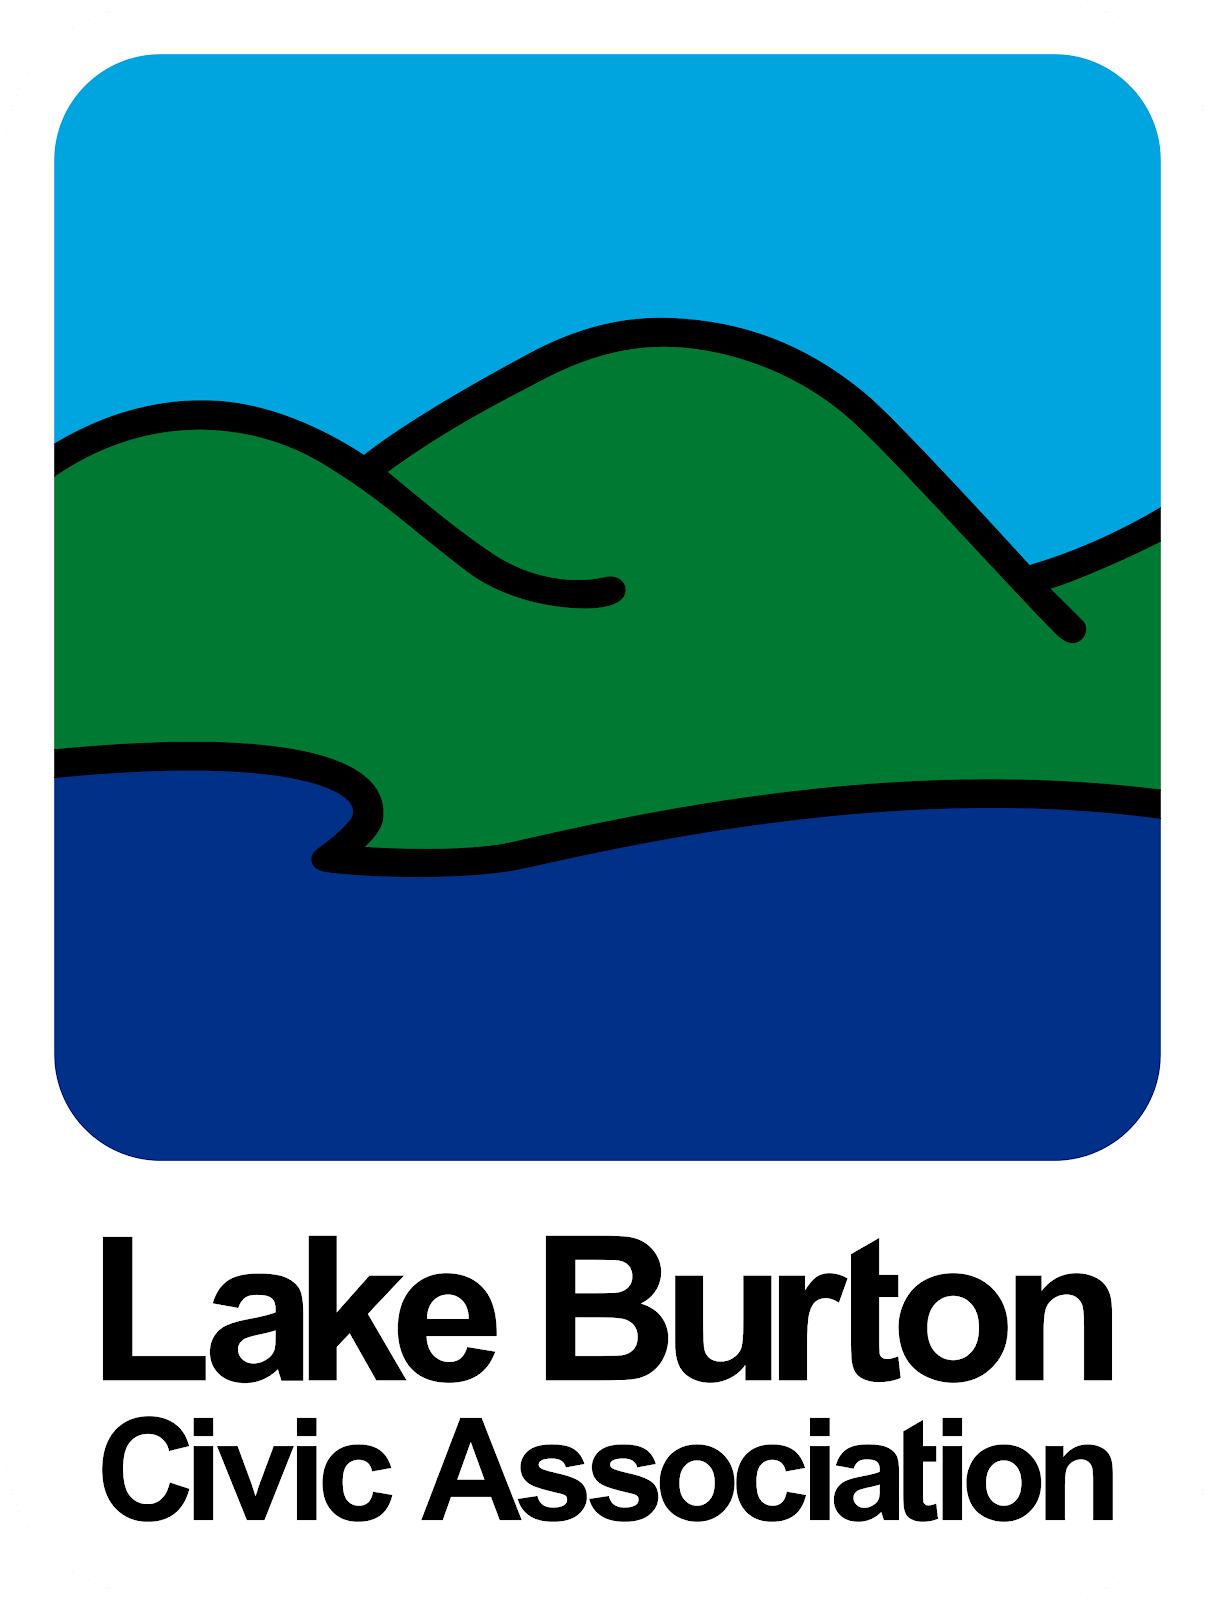 Lake Burton Civic Association